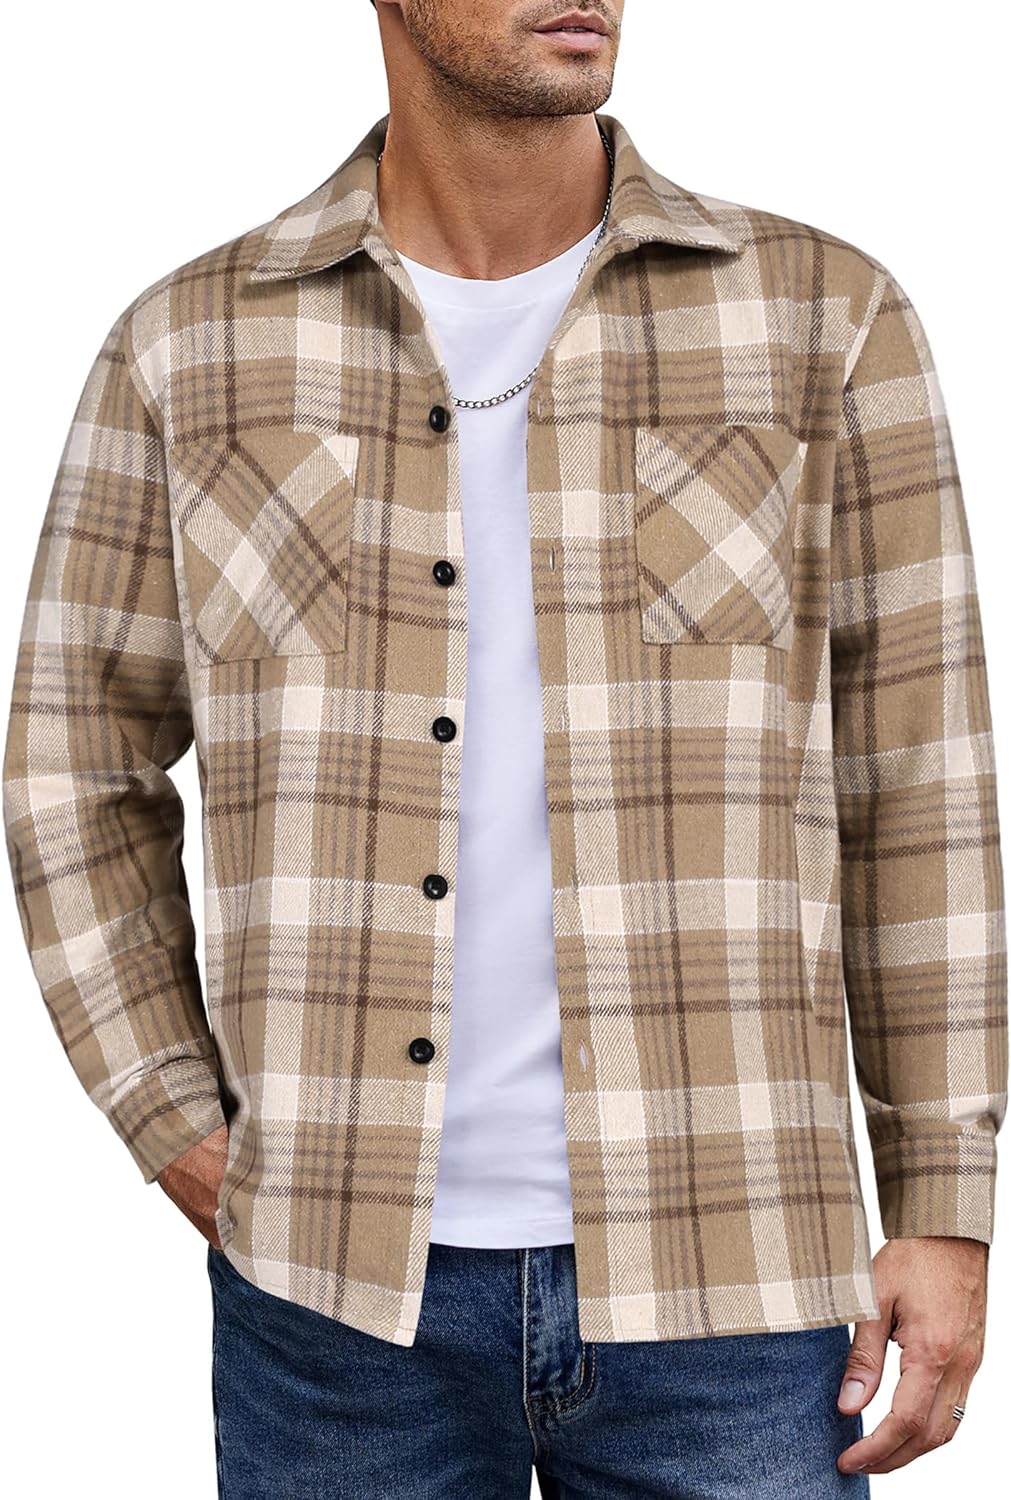 COOFANDY Men's Plaid Hoodie Flannel Shirt Jacket Long Sleeve Casual Fashion  Button Shirts